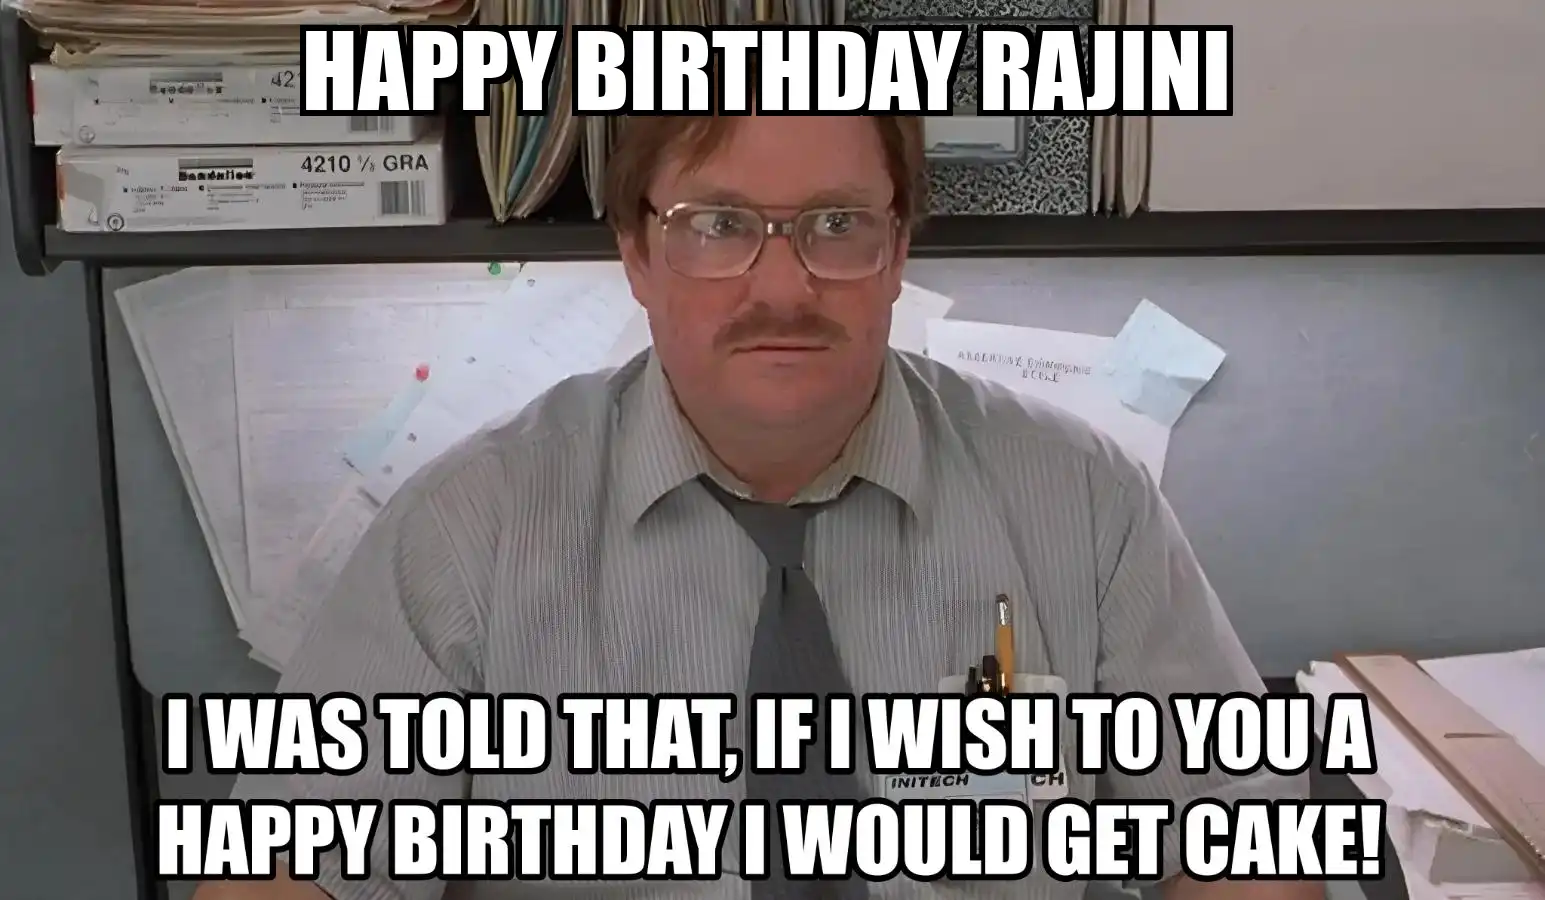 Happy Birthday Rajini I Would Get A Cake Meme